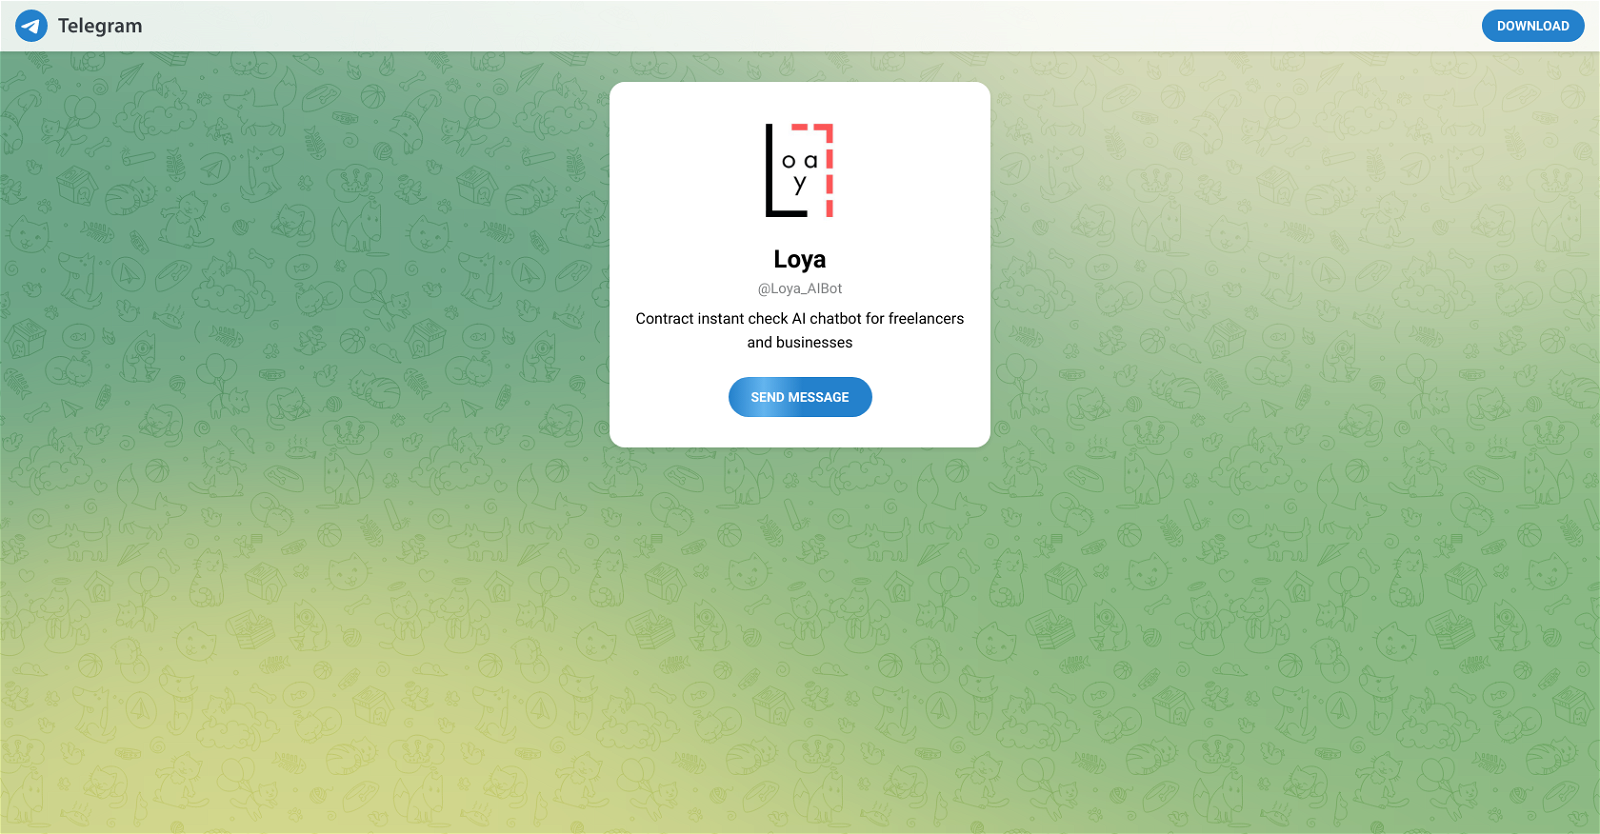 Loya website